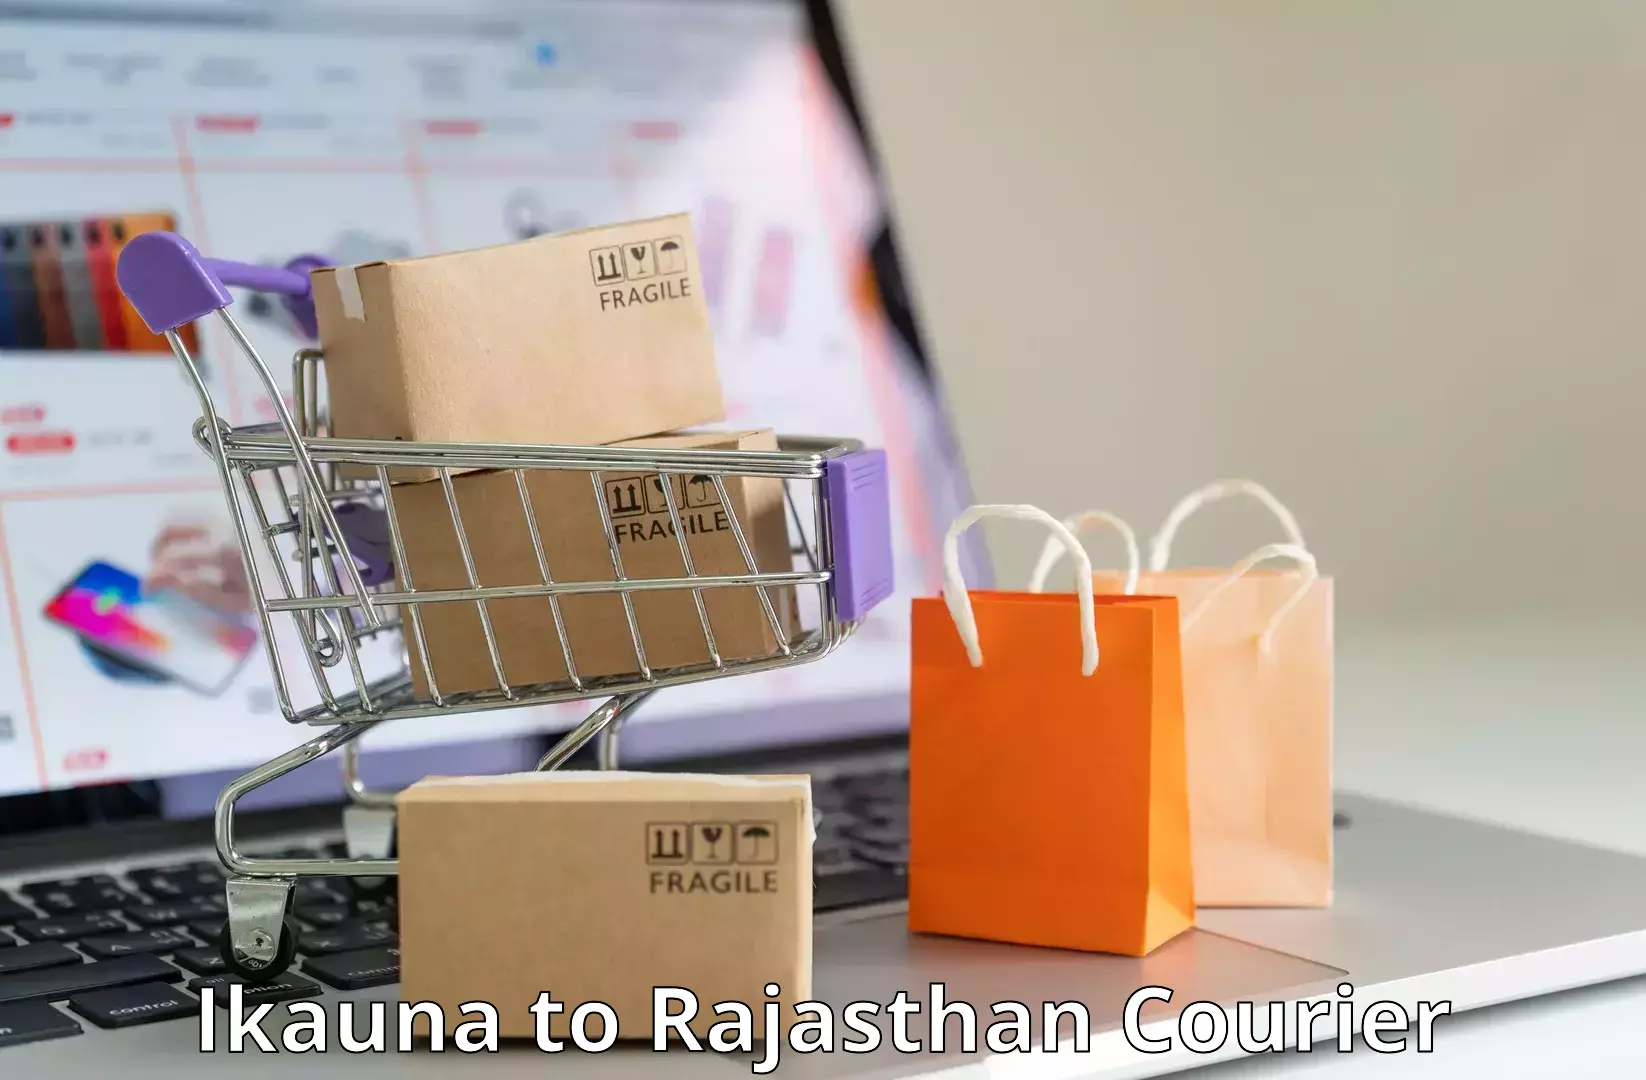 Customer-focused courier Ikauna to Renwal